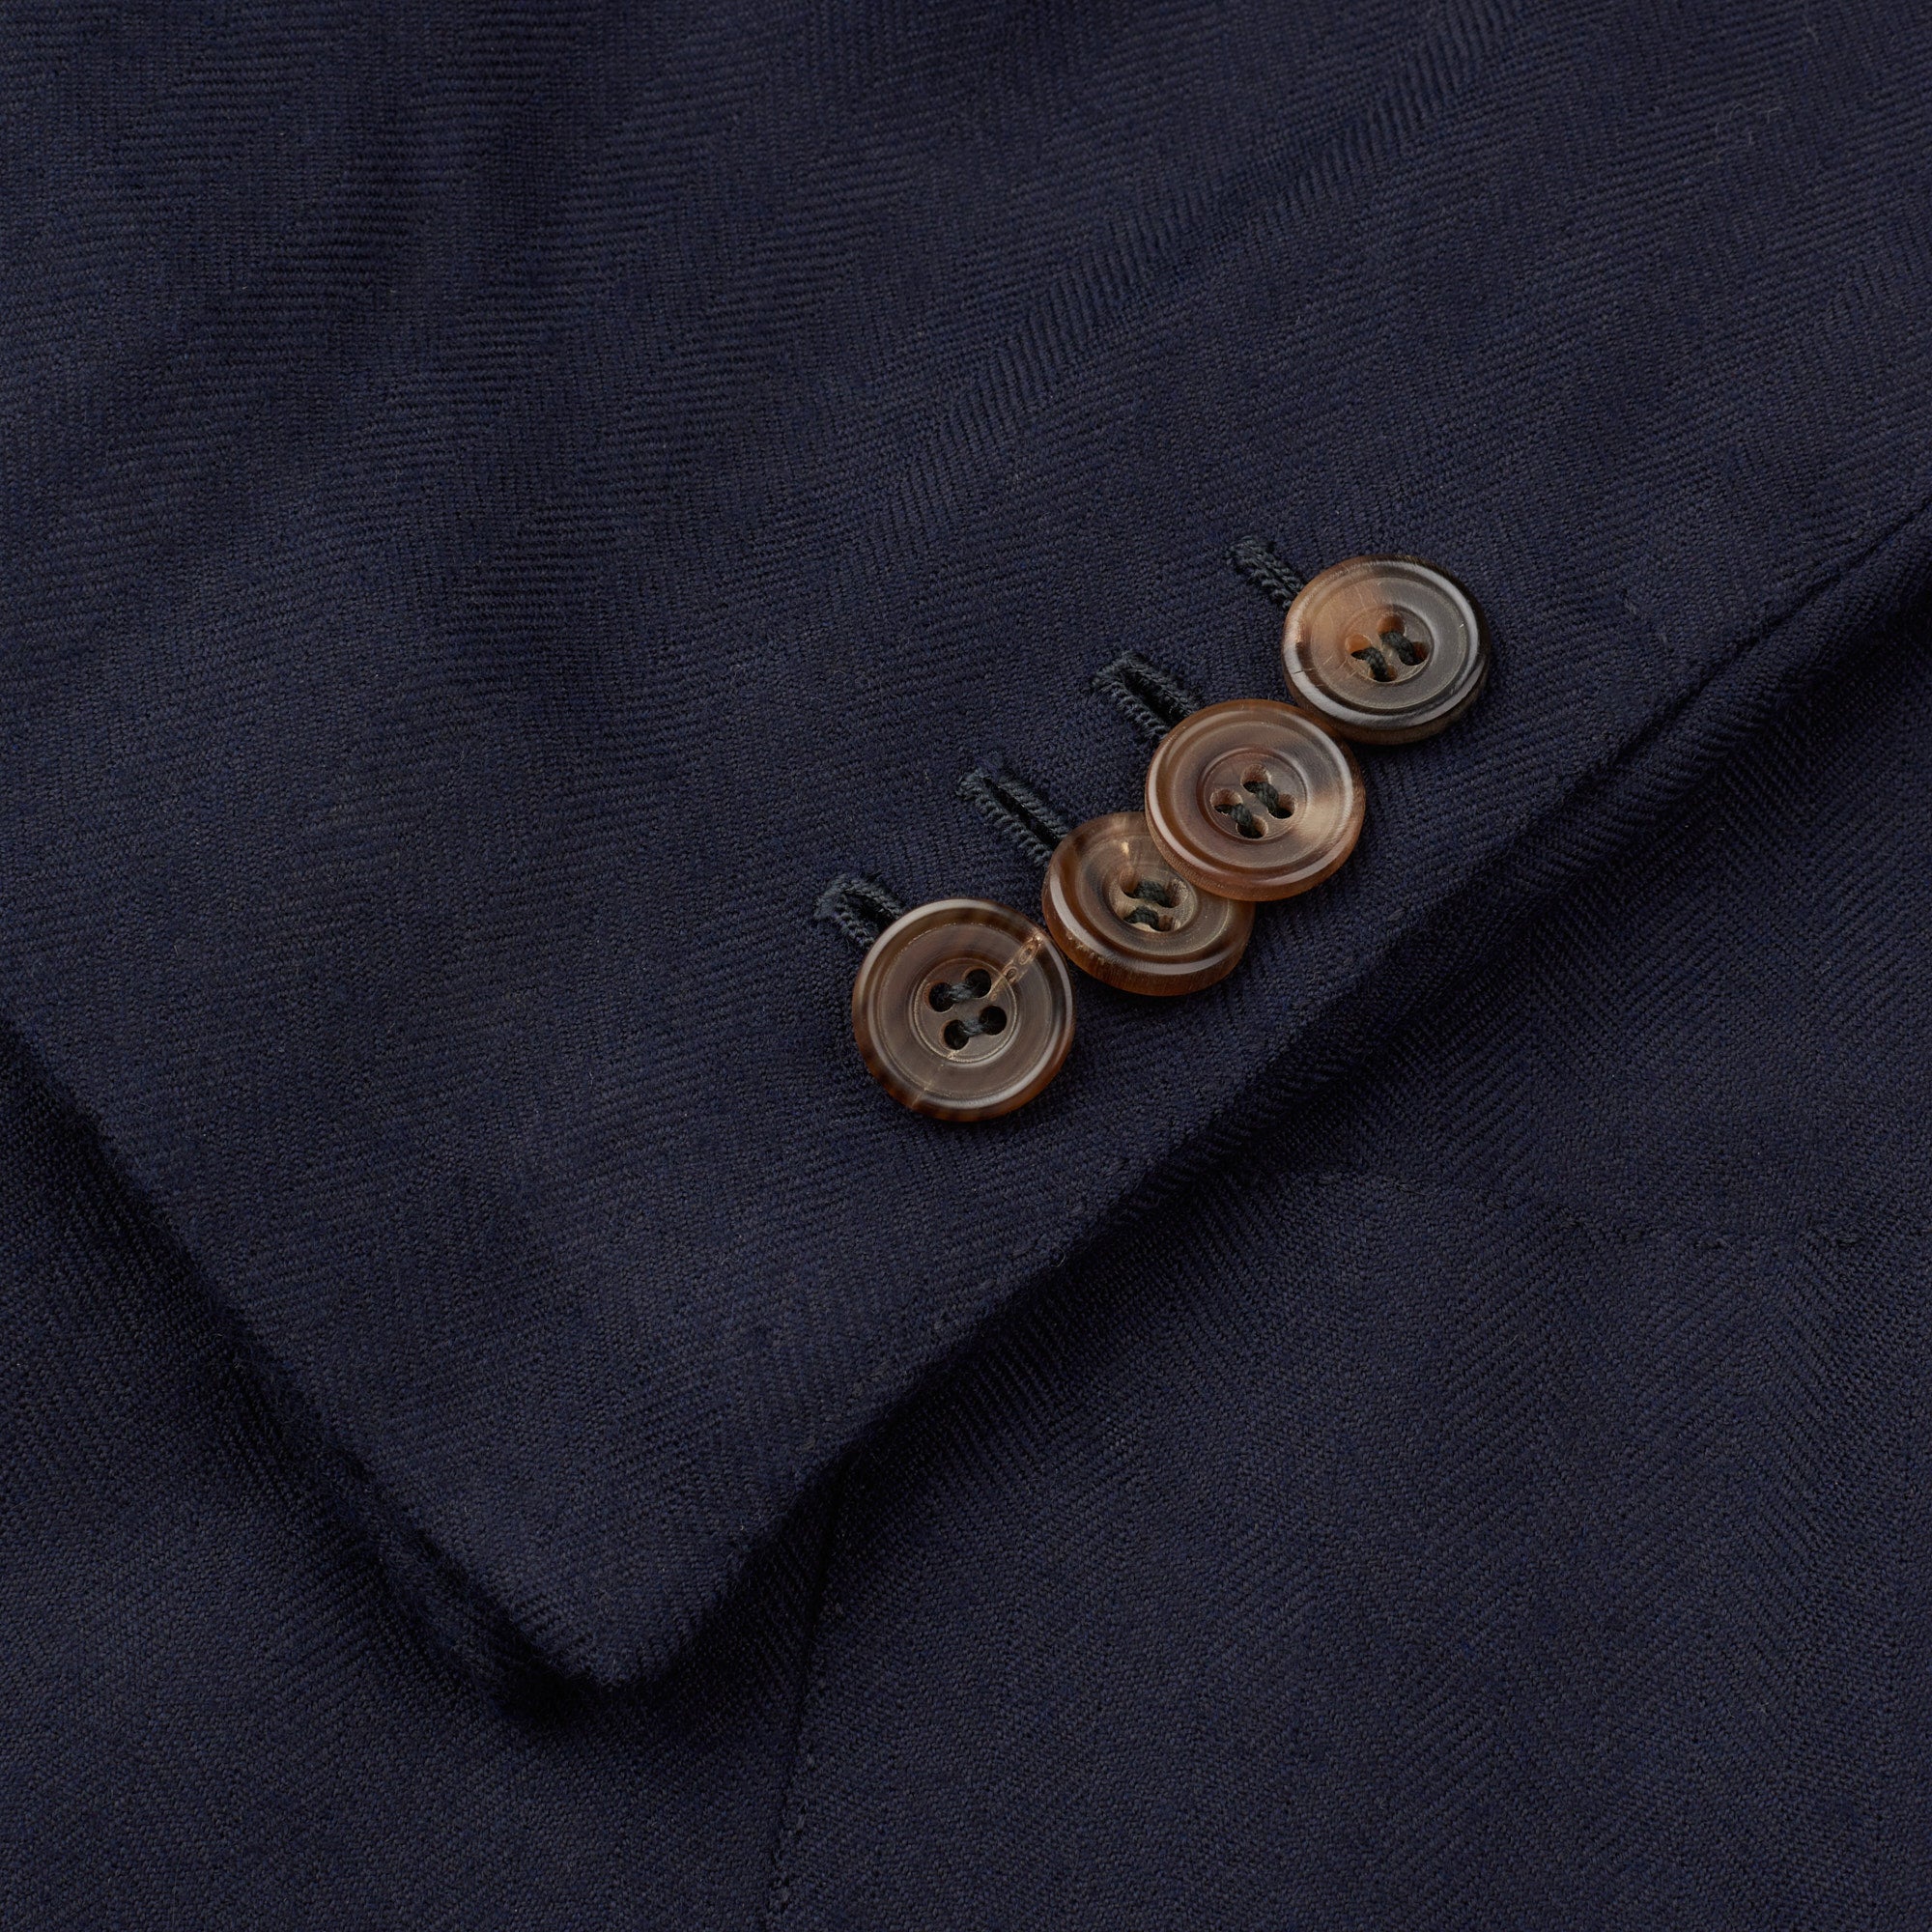 RUBINACCI LH Handmade Bespoke Navy Blue Herringbone Cashmere DB Jacket 50 US 40 RUBINACCI